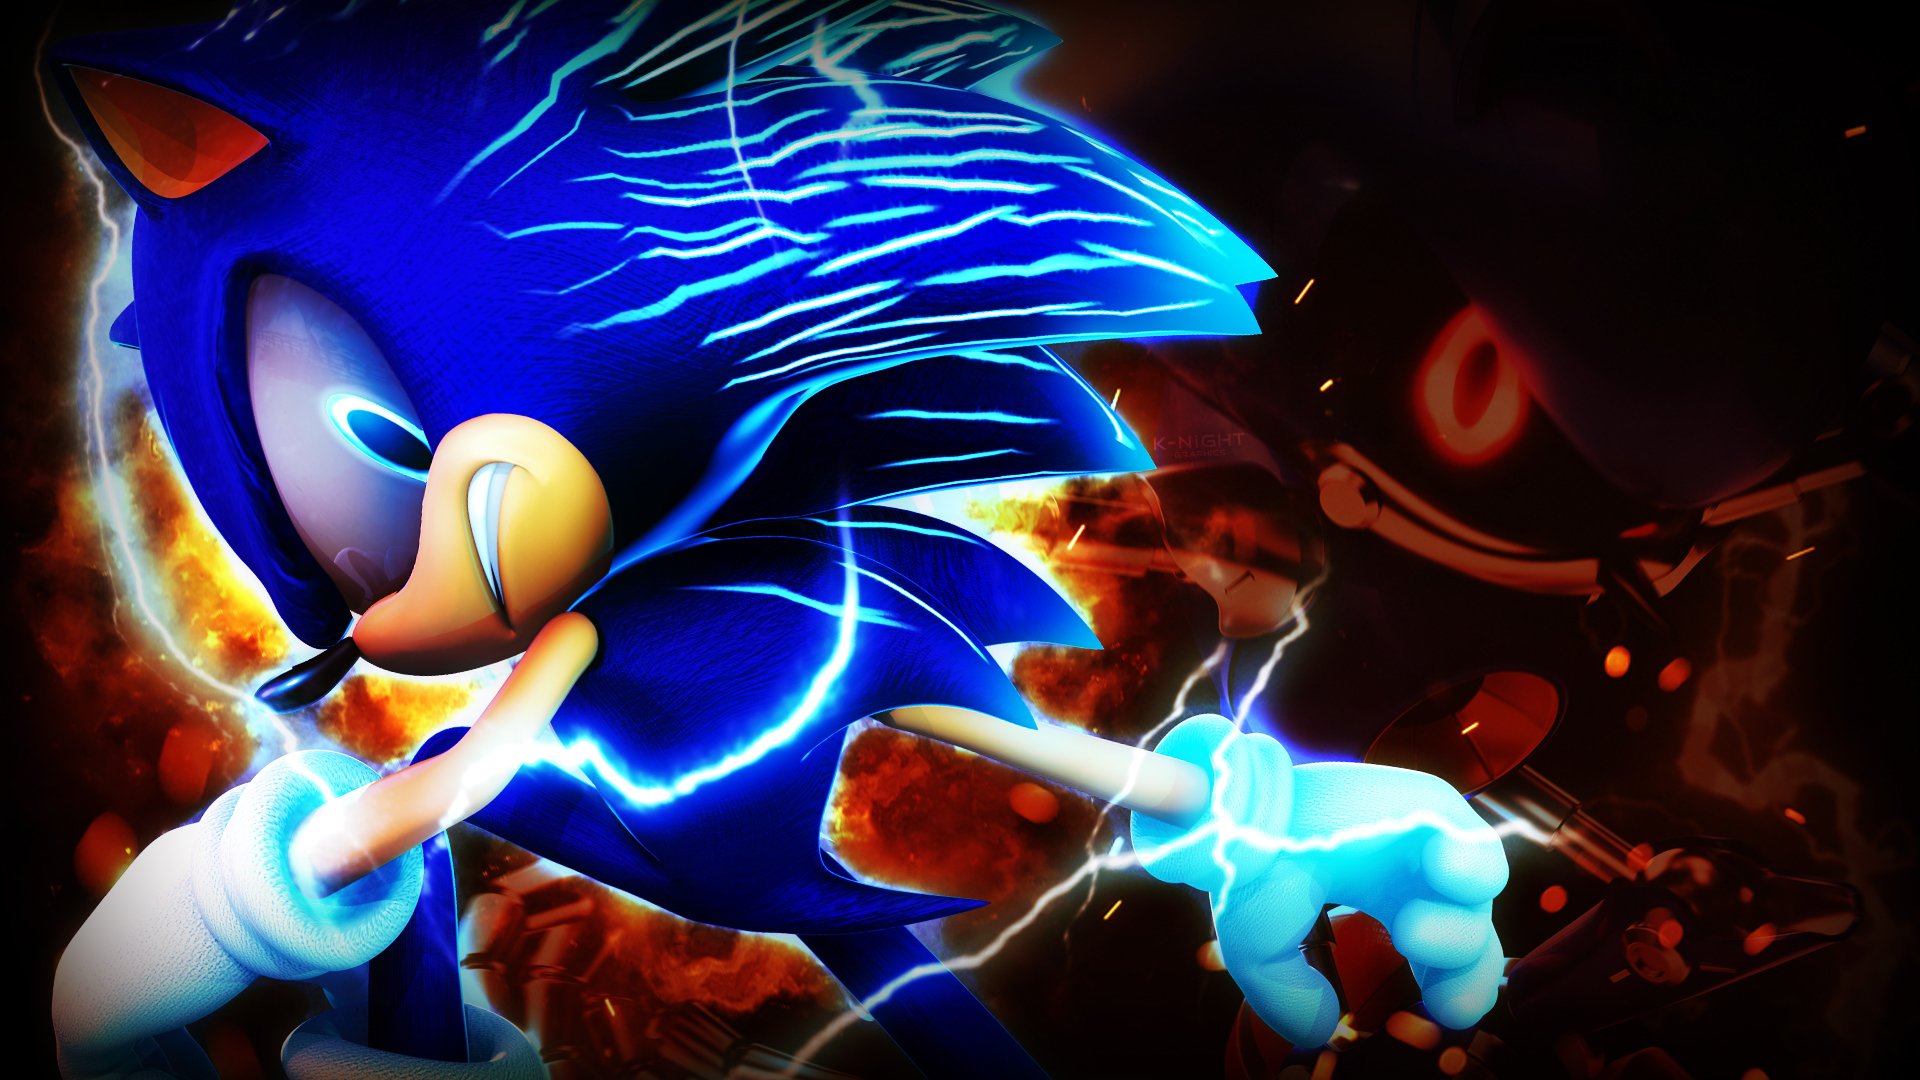 Metal Sonic #sonicthehedgehog#sonic #sonicfanart#sonicart#sega